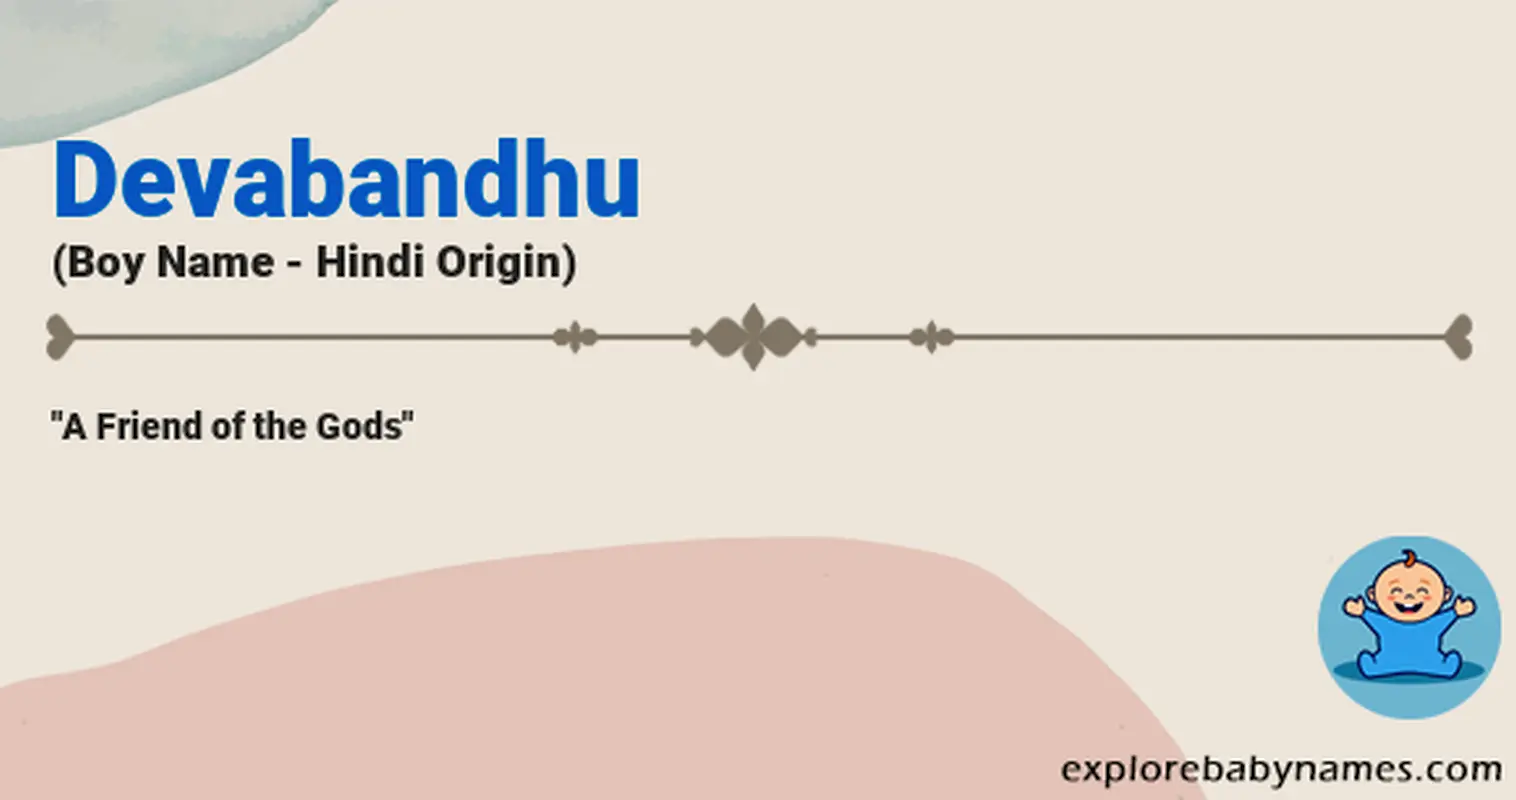 Meaning of Devabandhu